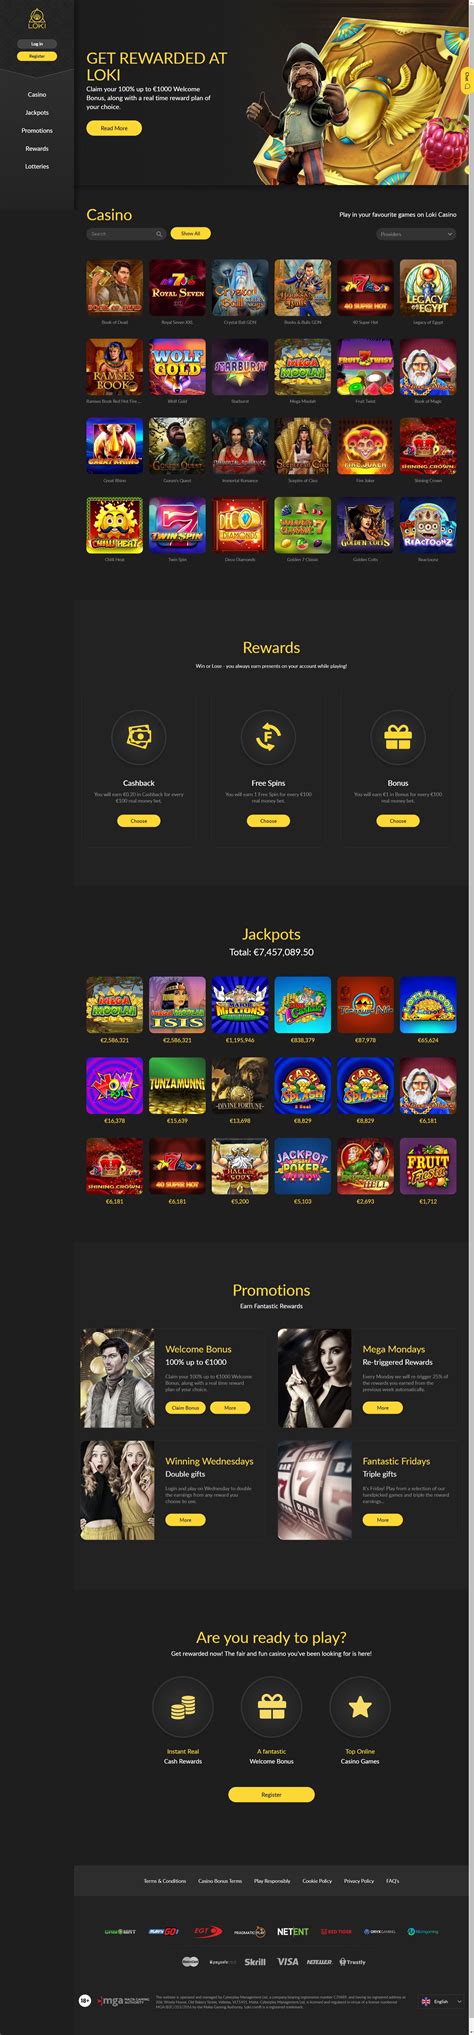 loki casino askgamblers beste online casino deutsch